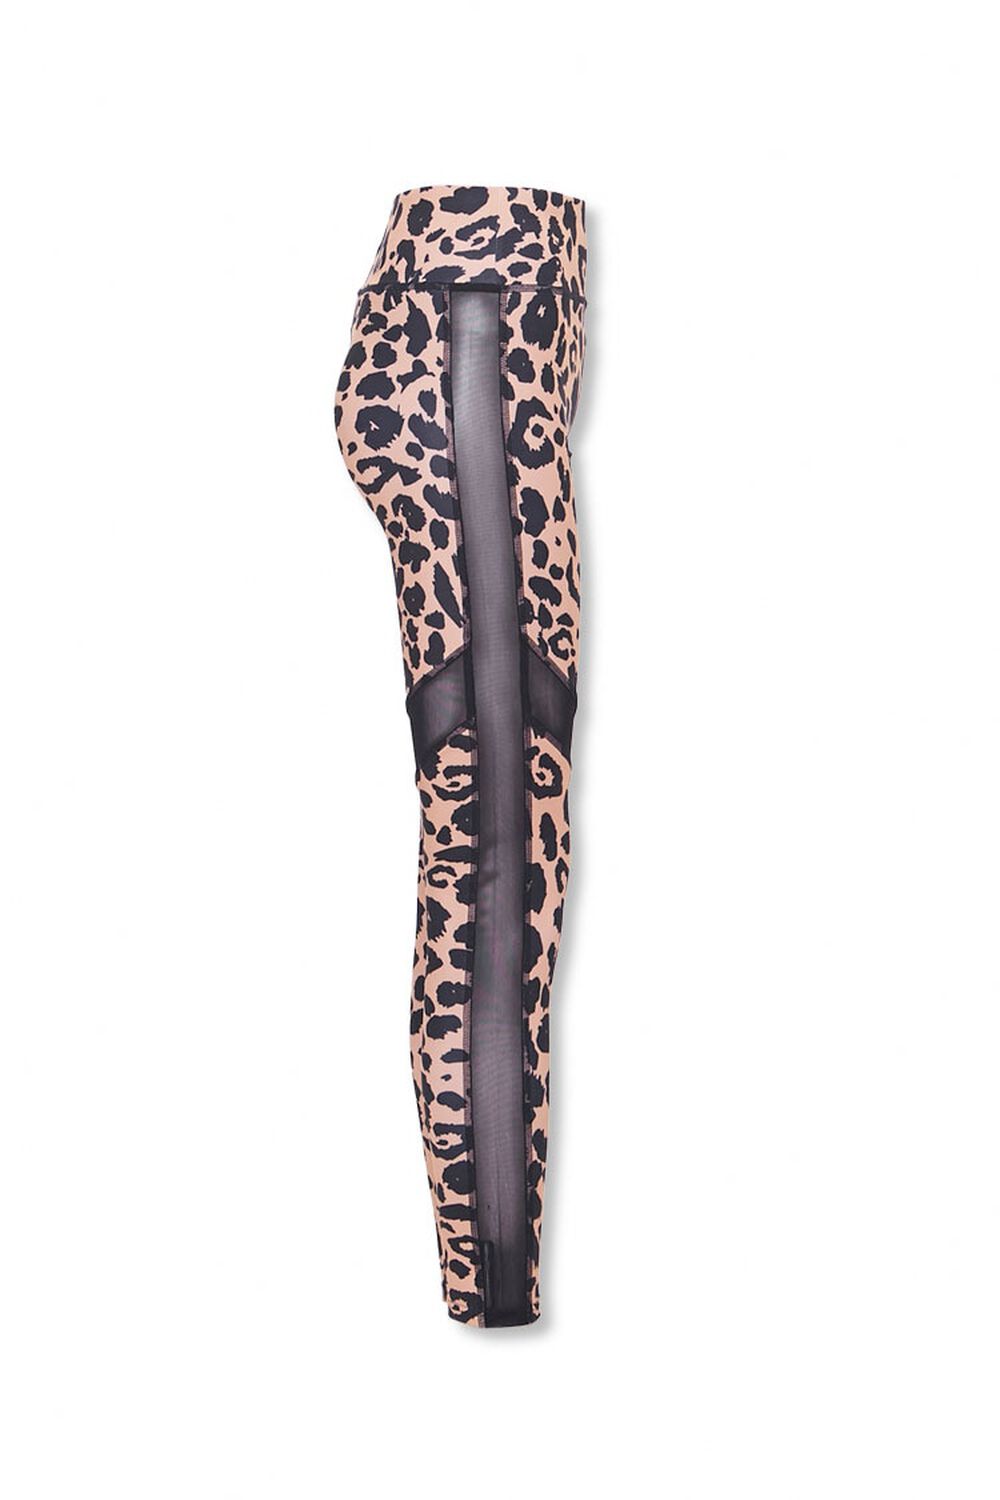 NATURAL/BLACK Active Leopard Print Leggings, image 2